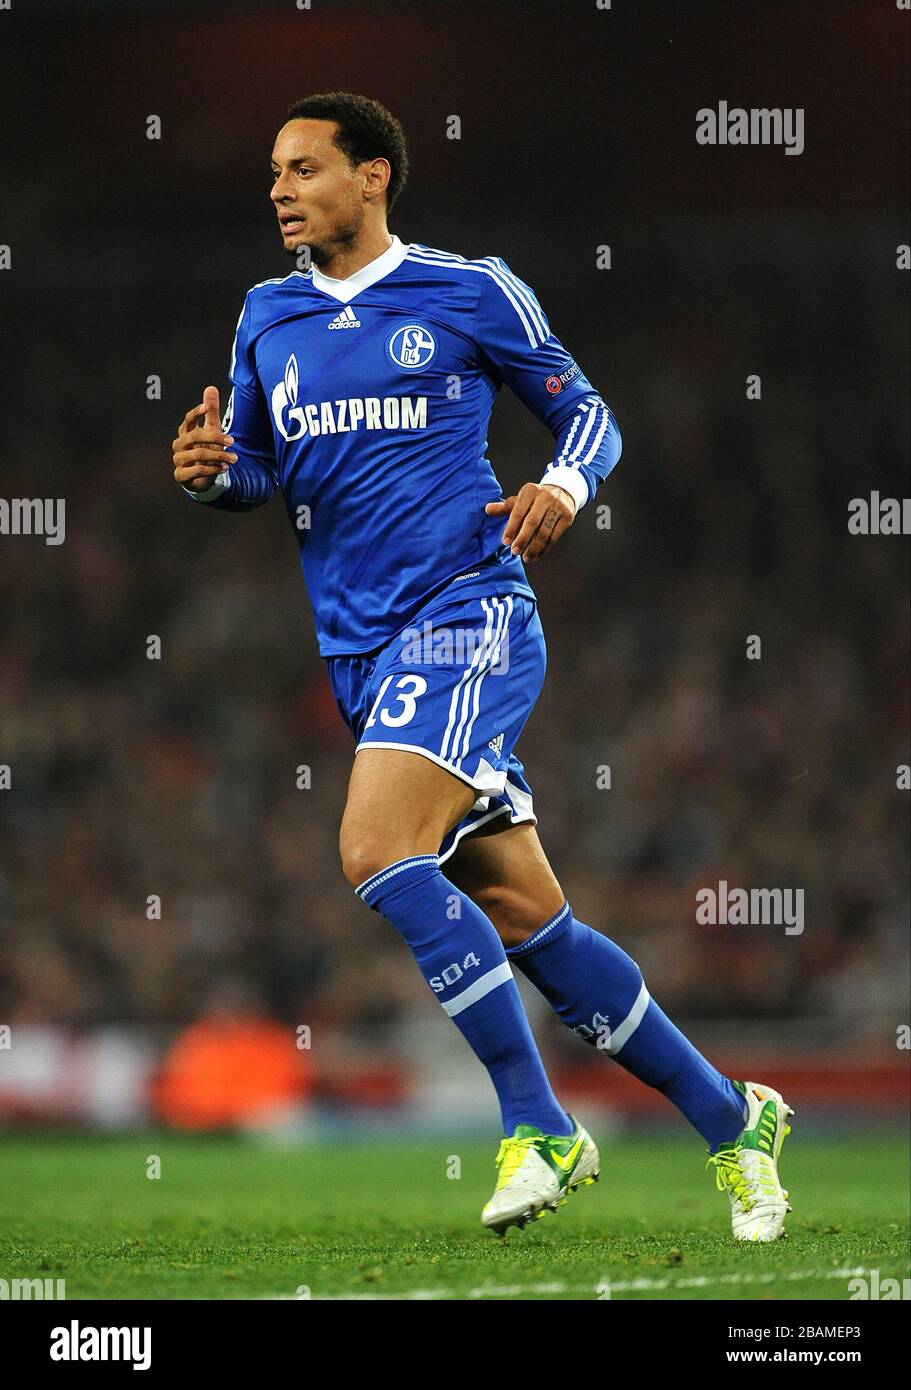 Joel Matip, Schalke 04 Stock Photo - Alamy